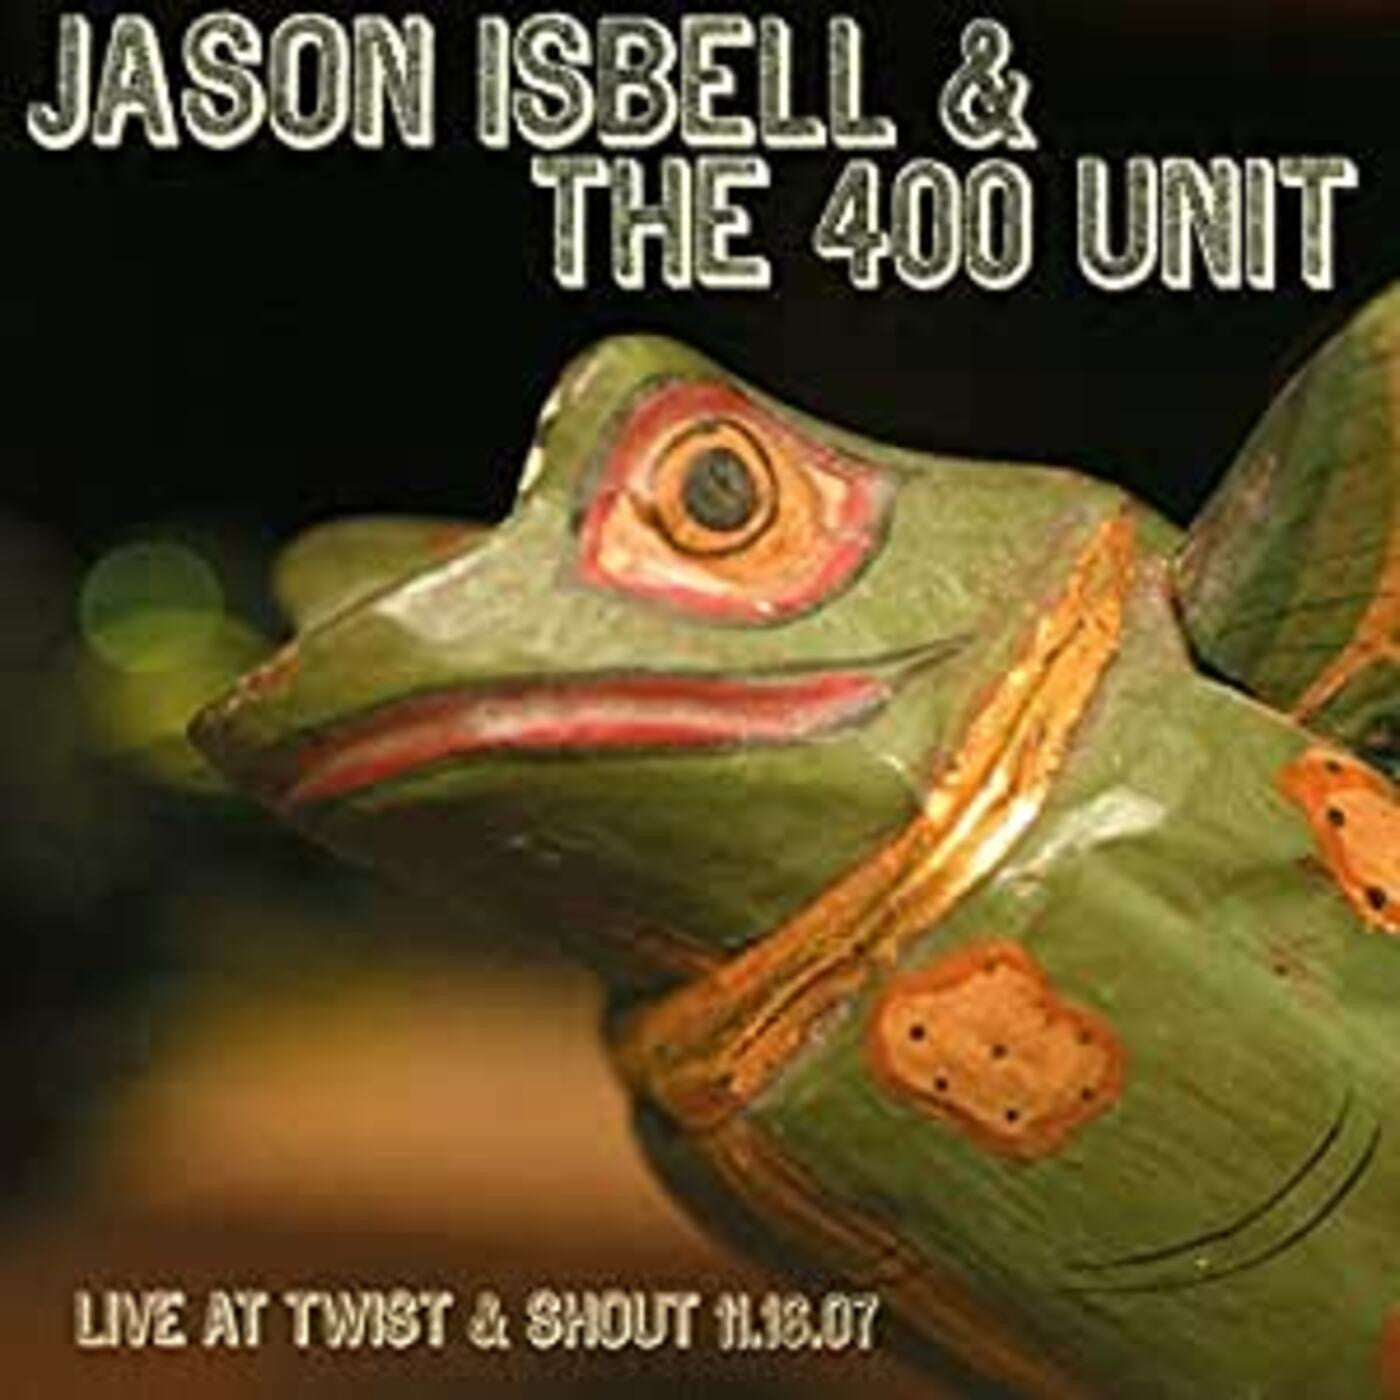 Jason Isbell - Live at Twist & Shout 11.16.07 (Vinyl LP)